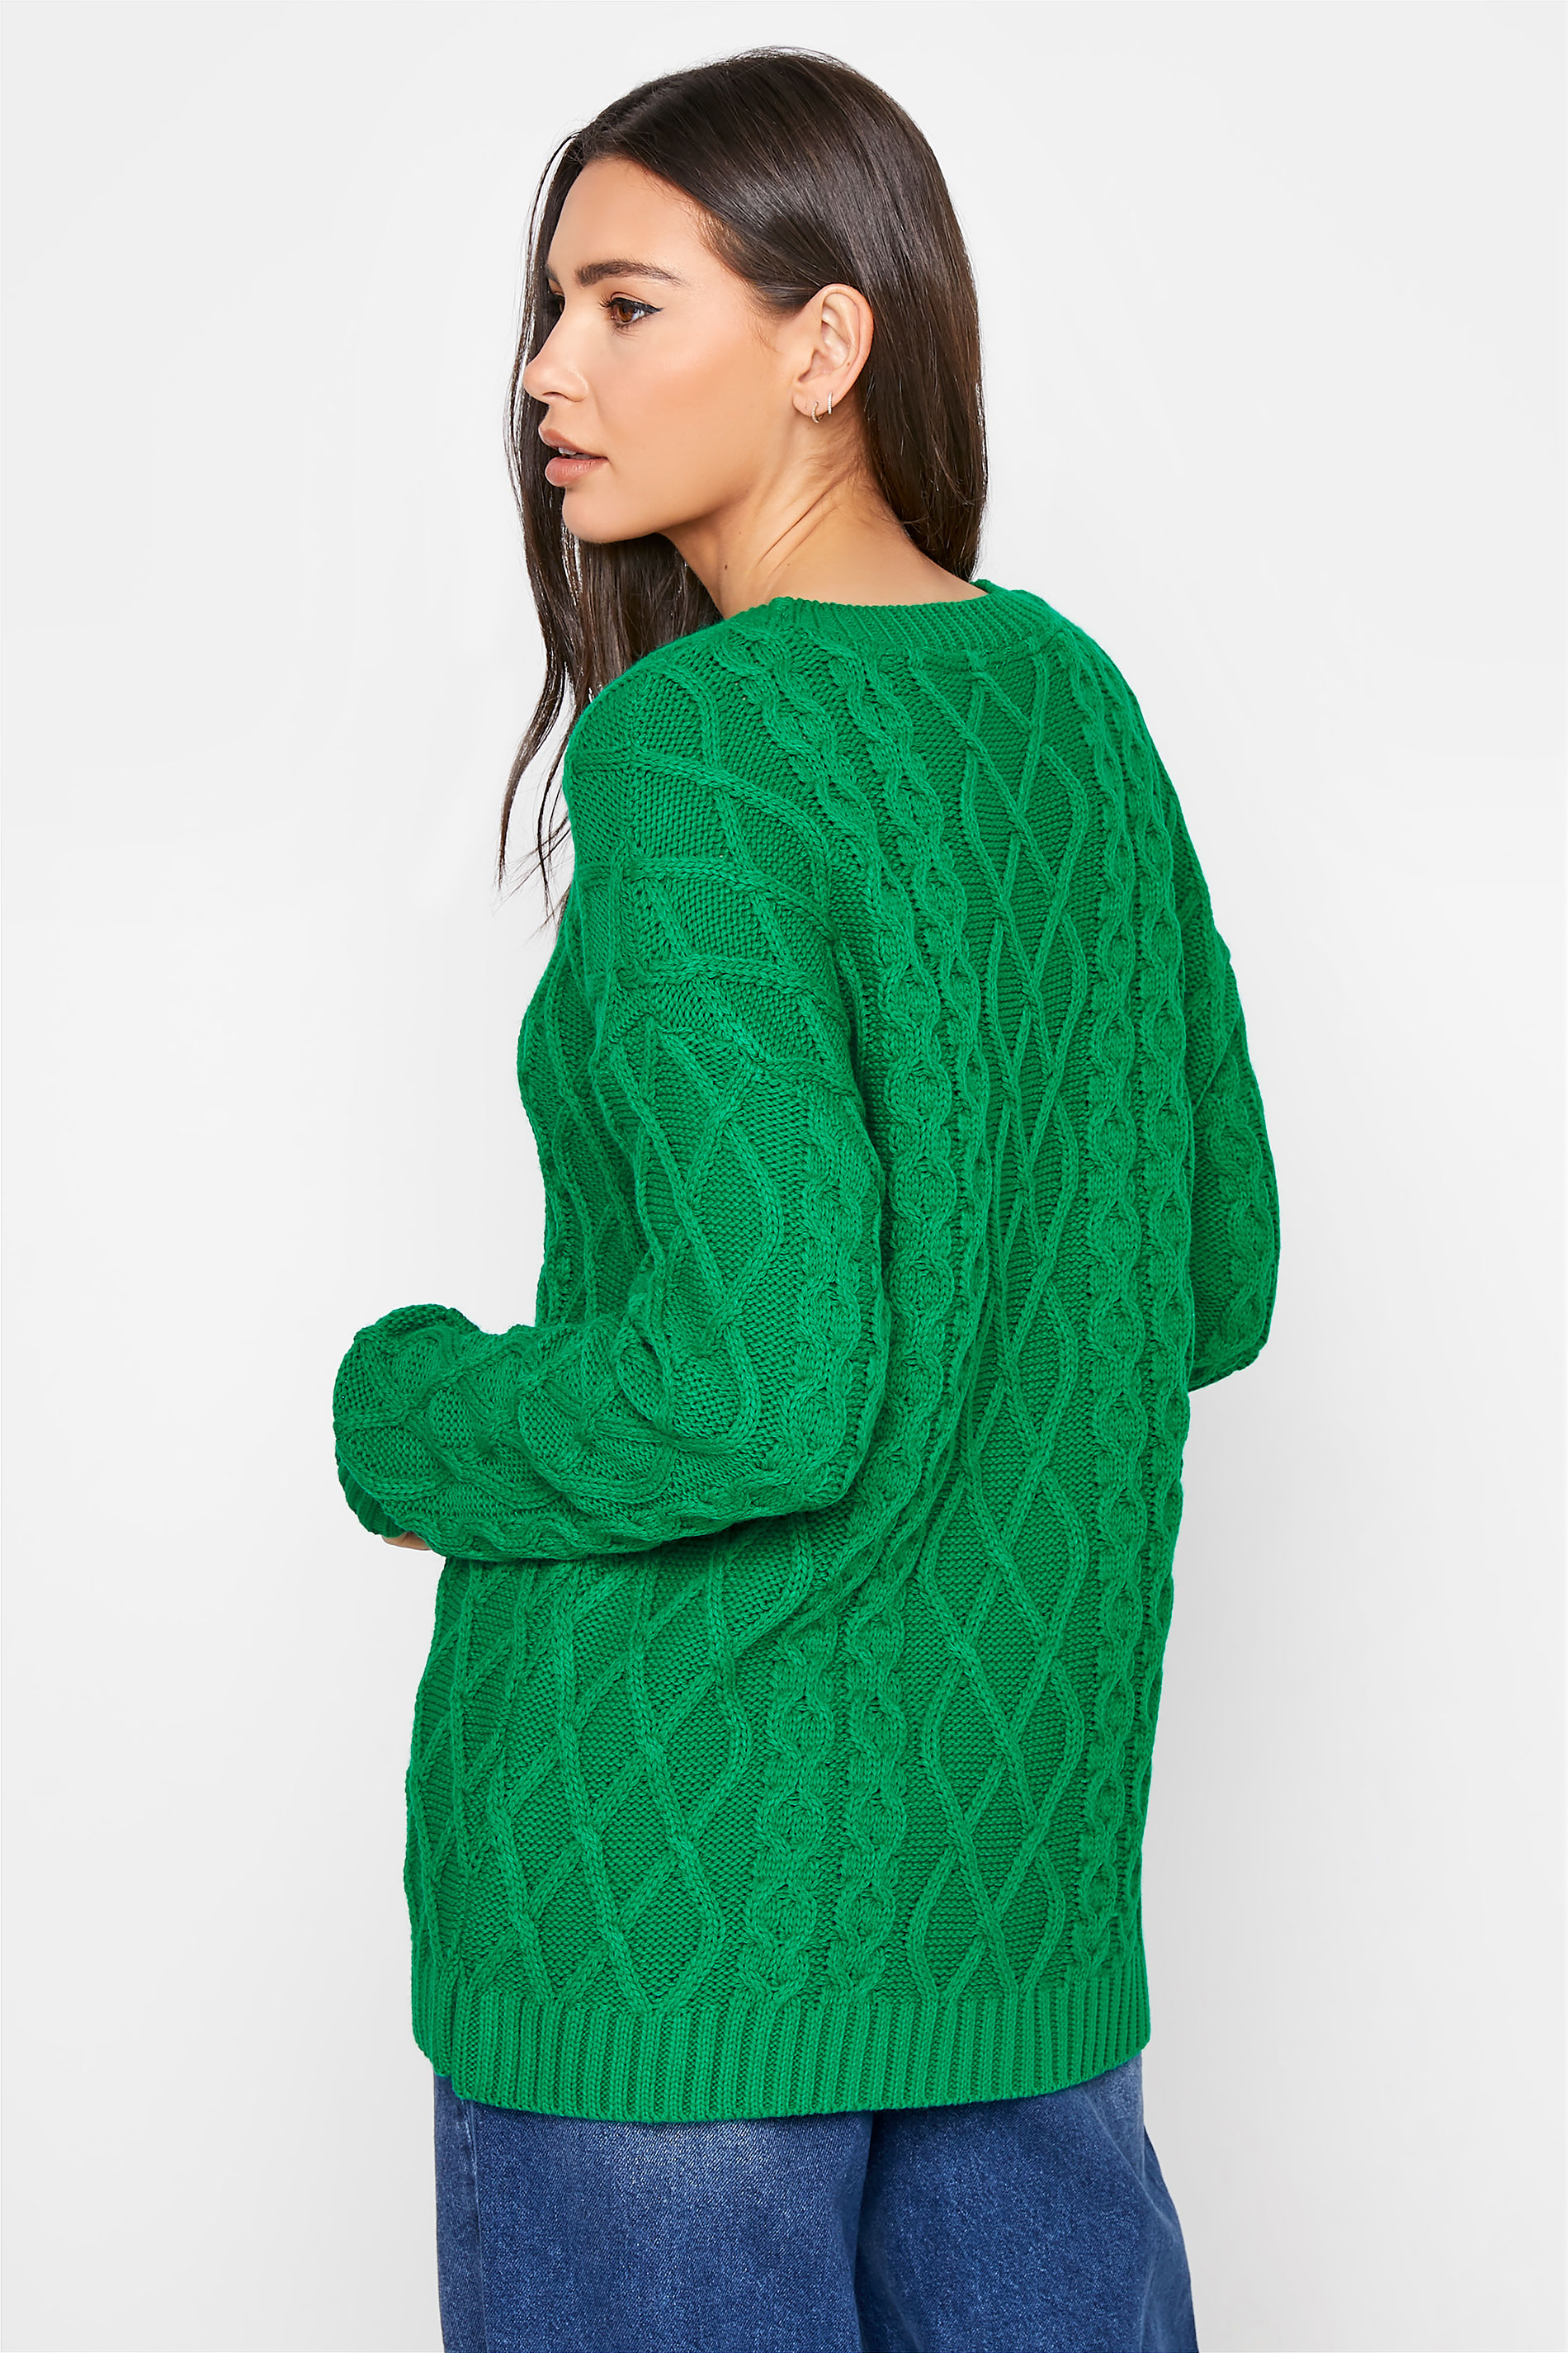 Tall Women's LTS Green Cable Knit Jumper | Long Tall Sally